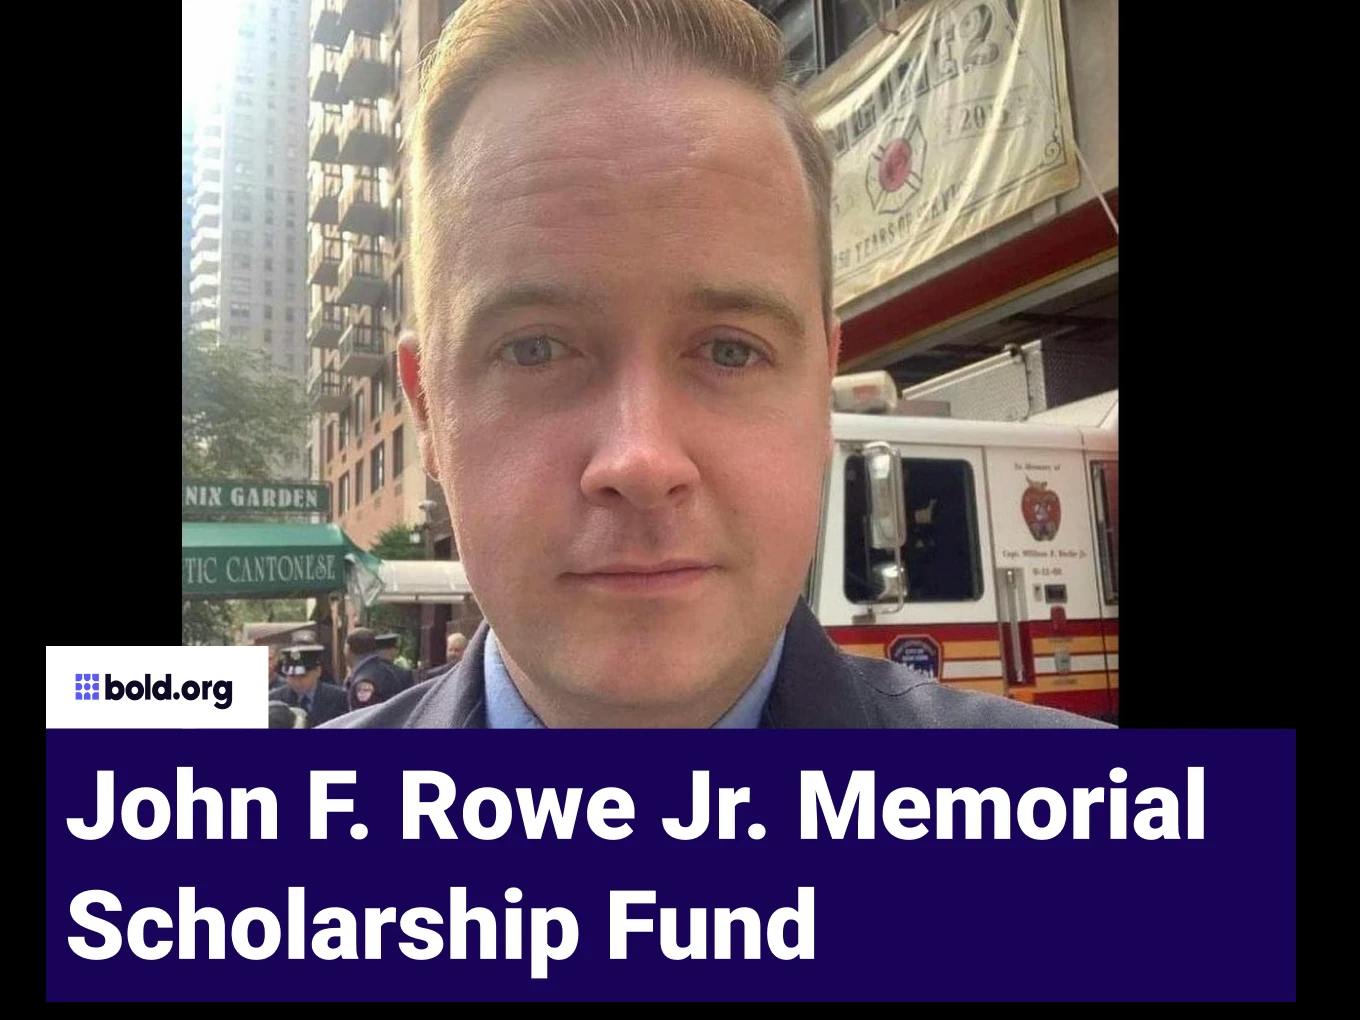 John F. Rowe Jr. Memorial Scholarship Fund